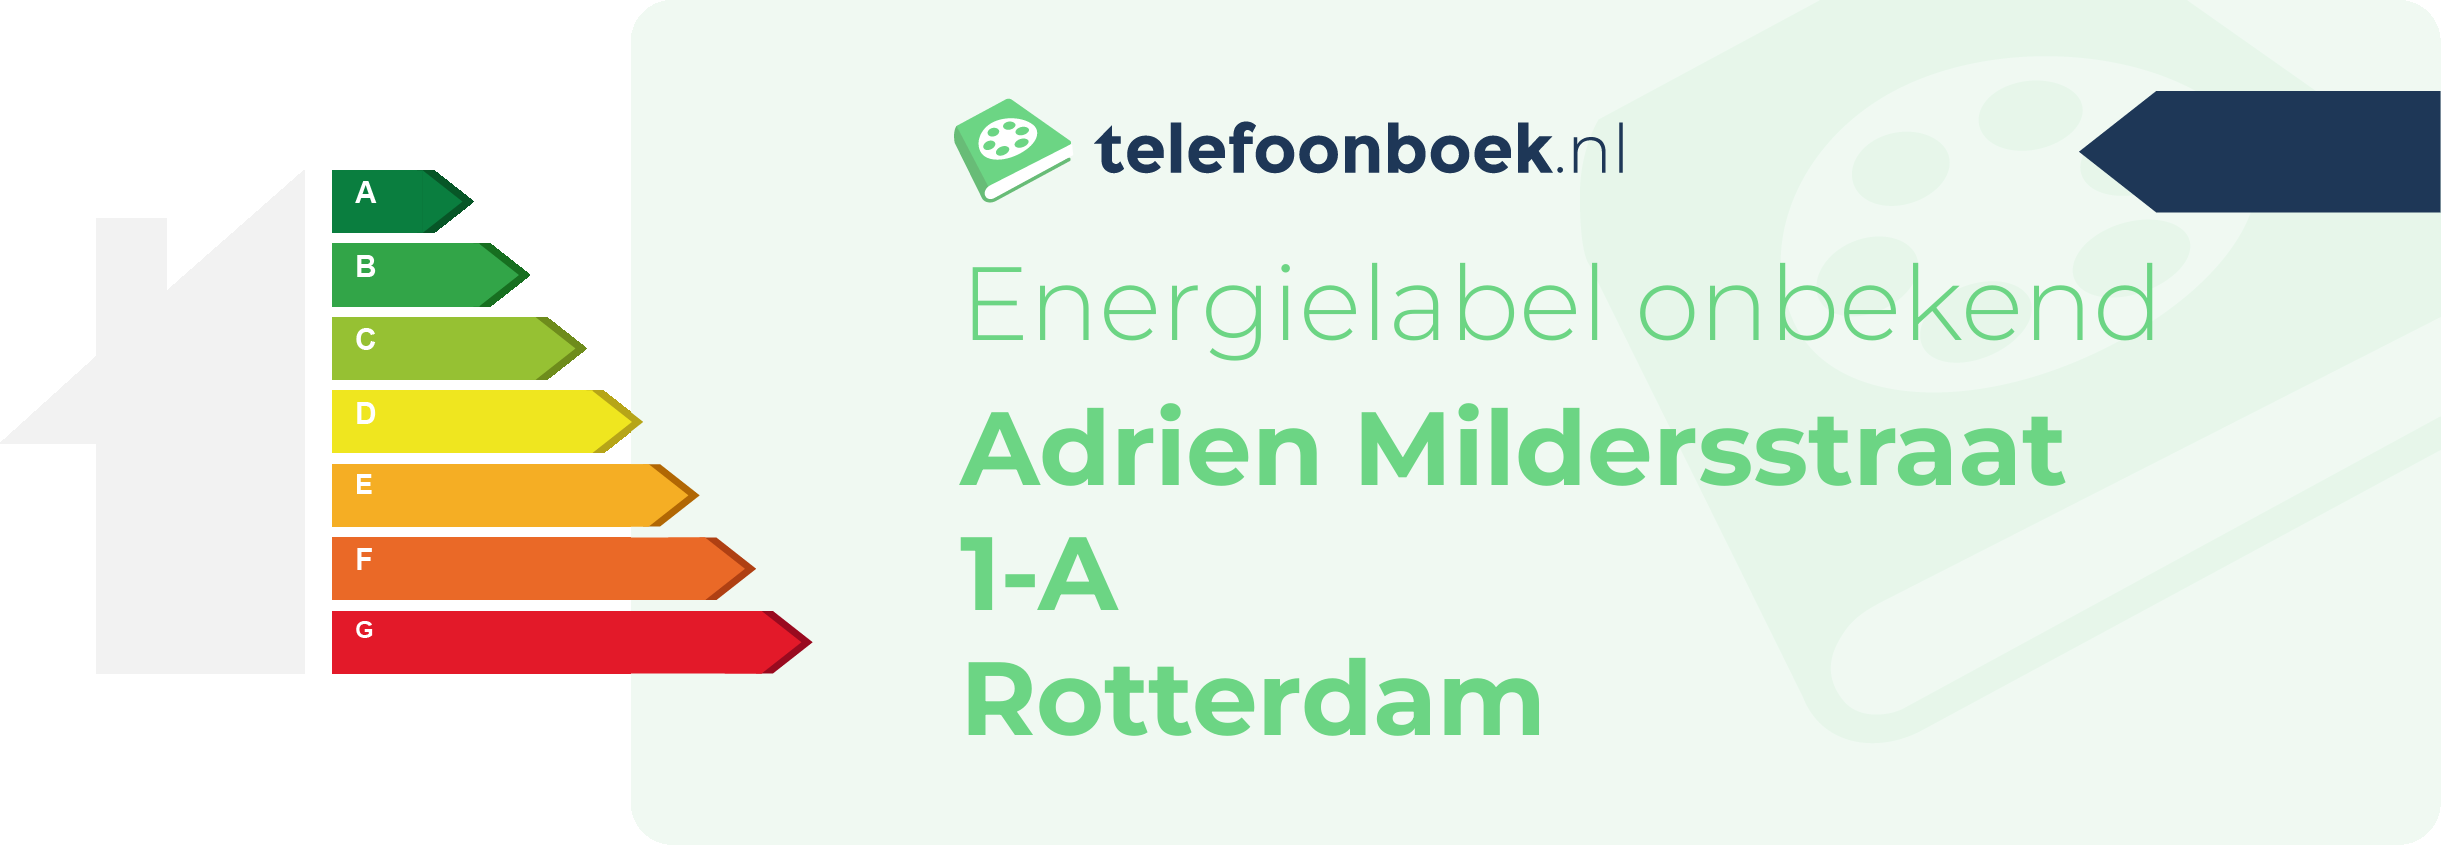 Energielabel Adrien Mildersstraat 1-A Rotterdam